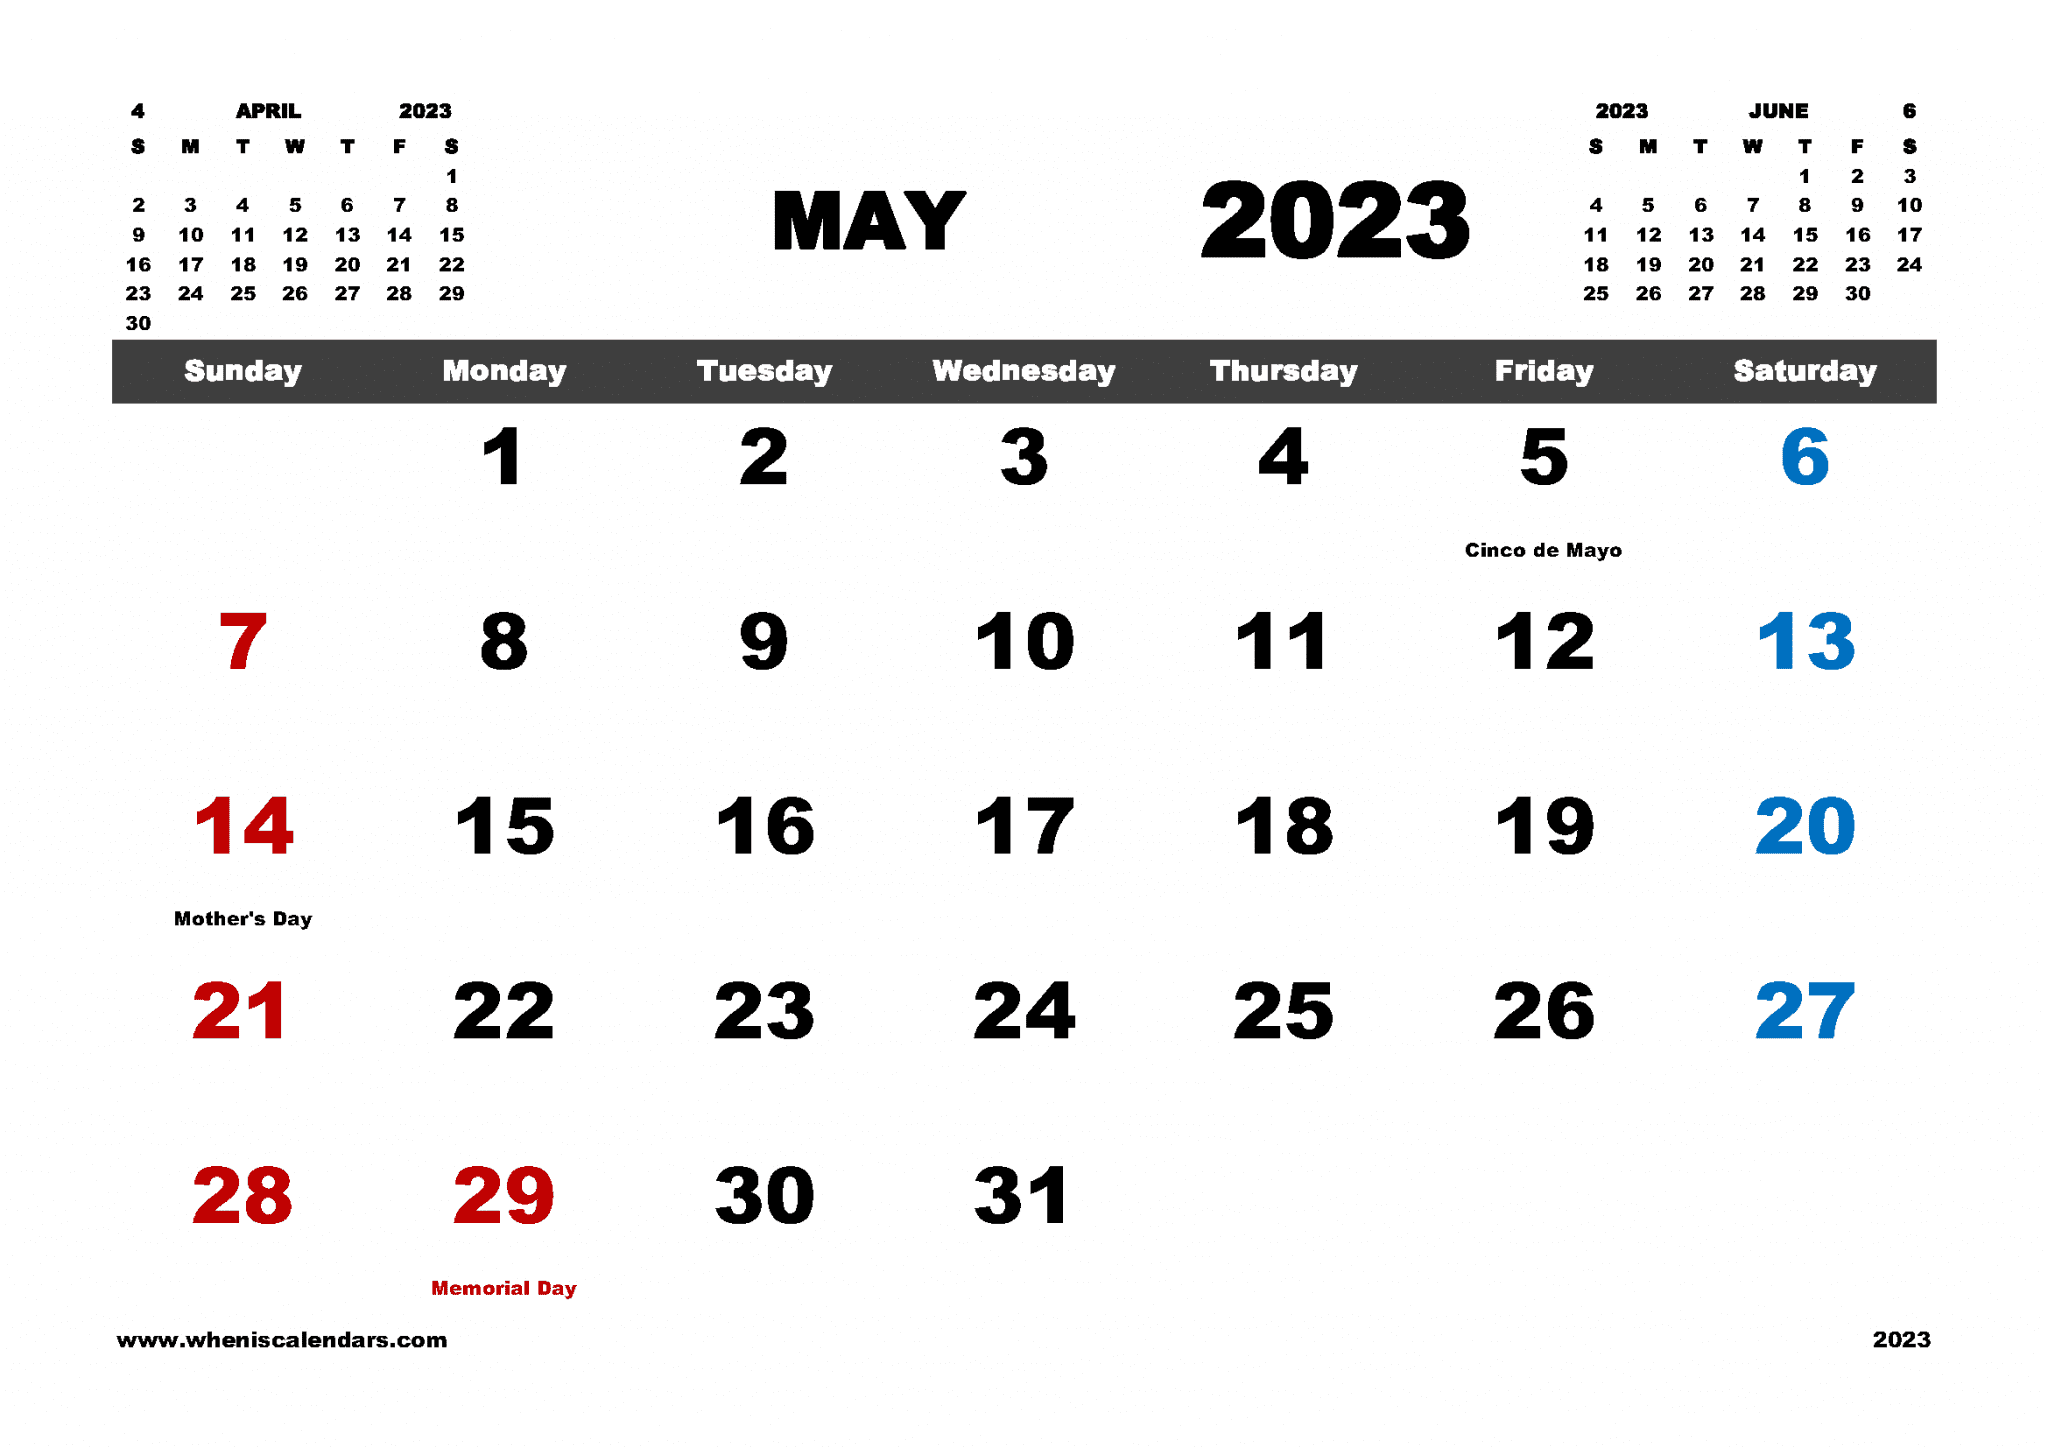 large-2023-calendar-with-holidays-calendar-quickly-holidaycalendars